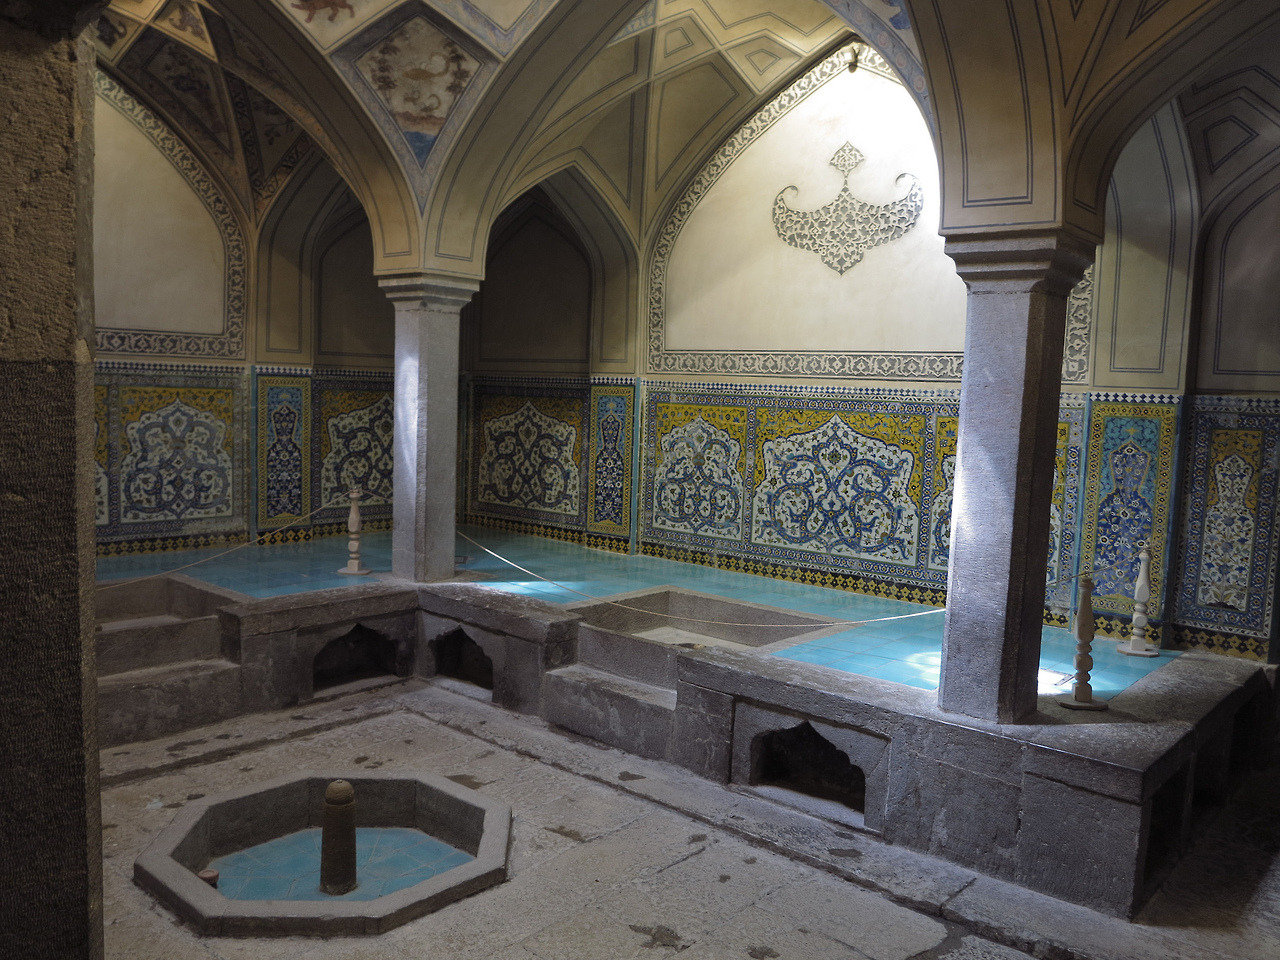 arjuna-vallabha:
“Hammam Ali Gholi Agha, Isfahan, Iran
”